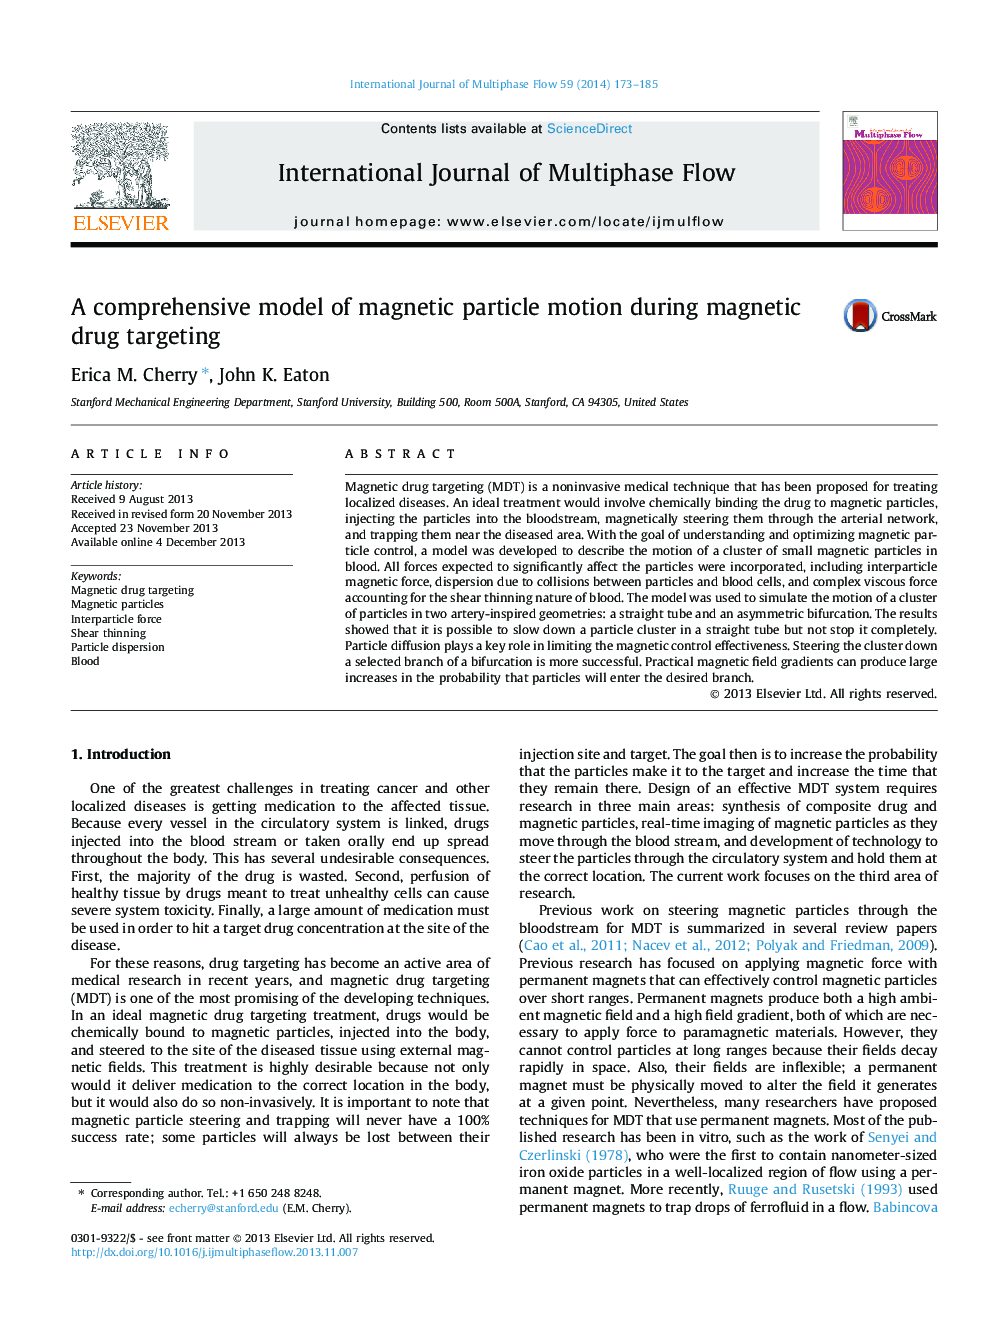 A comprehensive model of magnetic particle motion during magnetic drug targeting